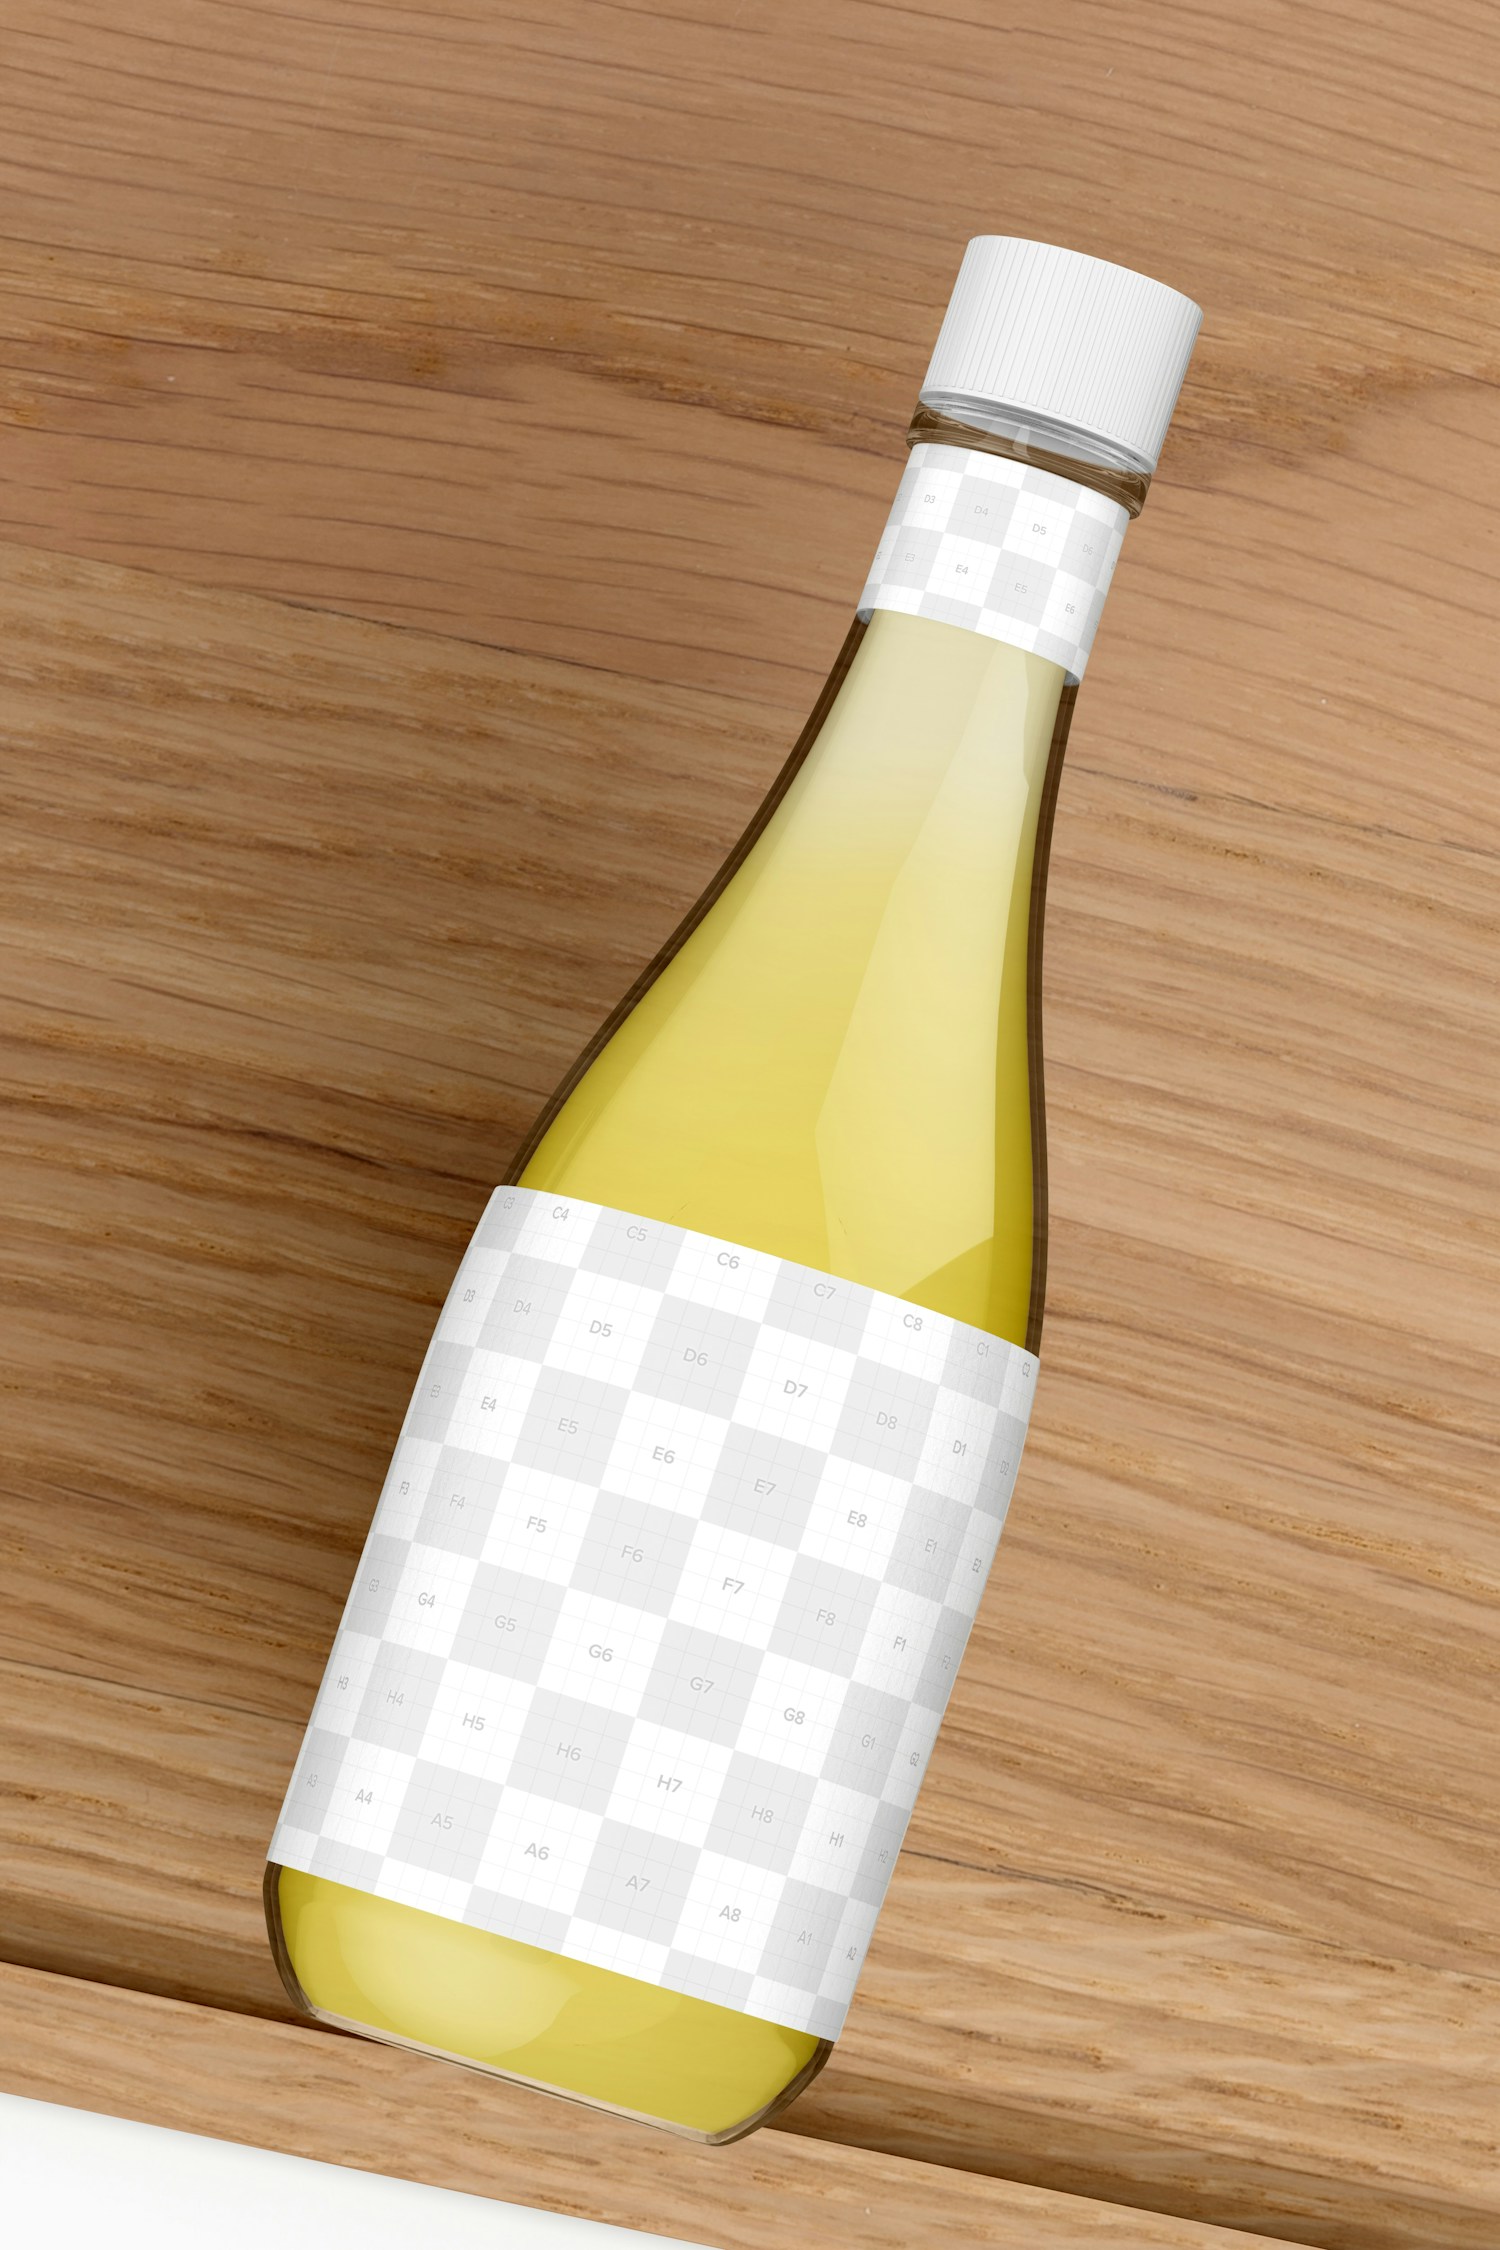 14.5 oz Lemon Vinaigrette Bottle Mockup, Top View